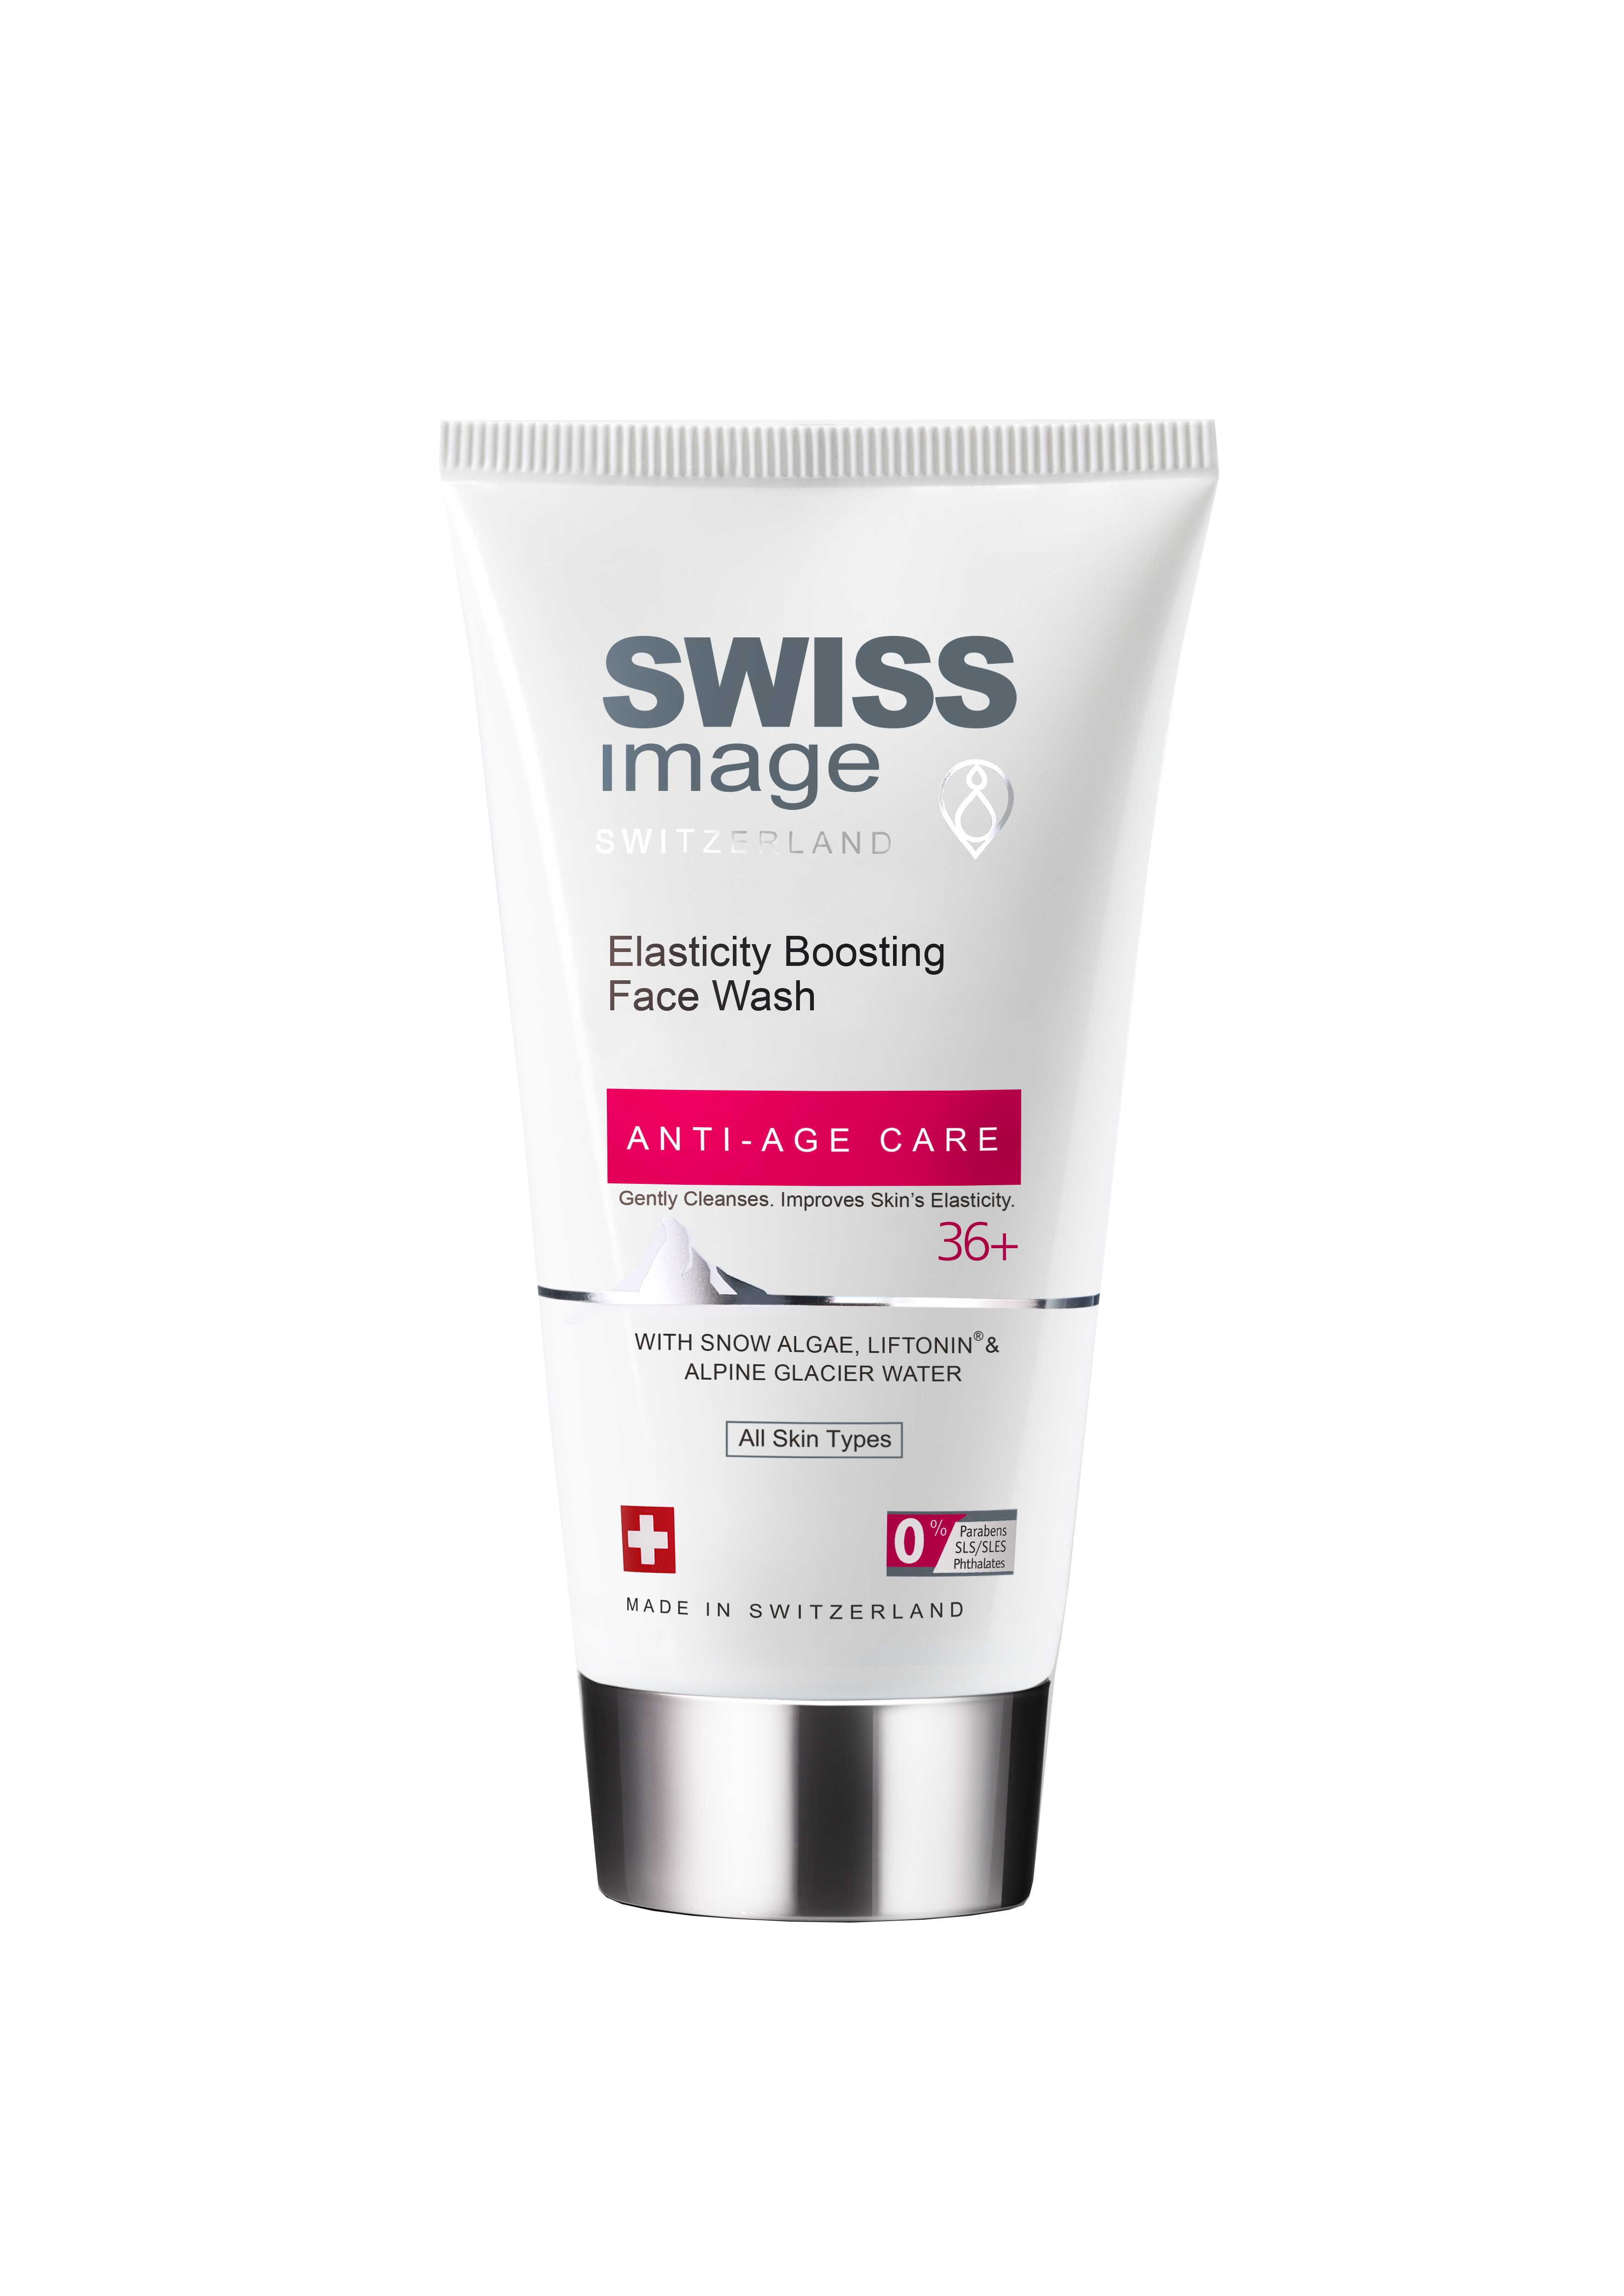 Sữa rửa mặt làm sạch ngừa nếp nhăn chống lão hoá da Swiss Image 36+ Elasticity Boosting Face Wash 150ml (Tuổi từ 36+)